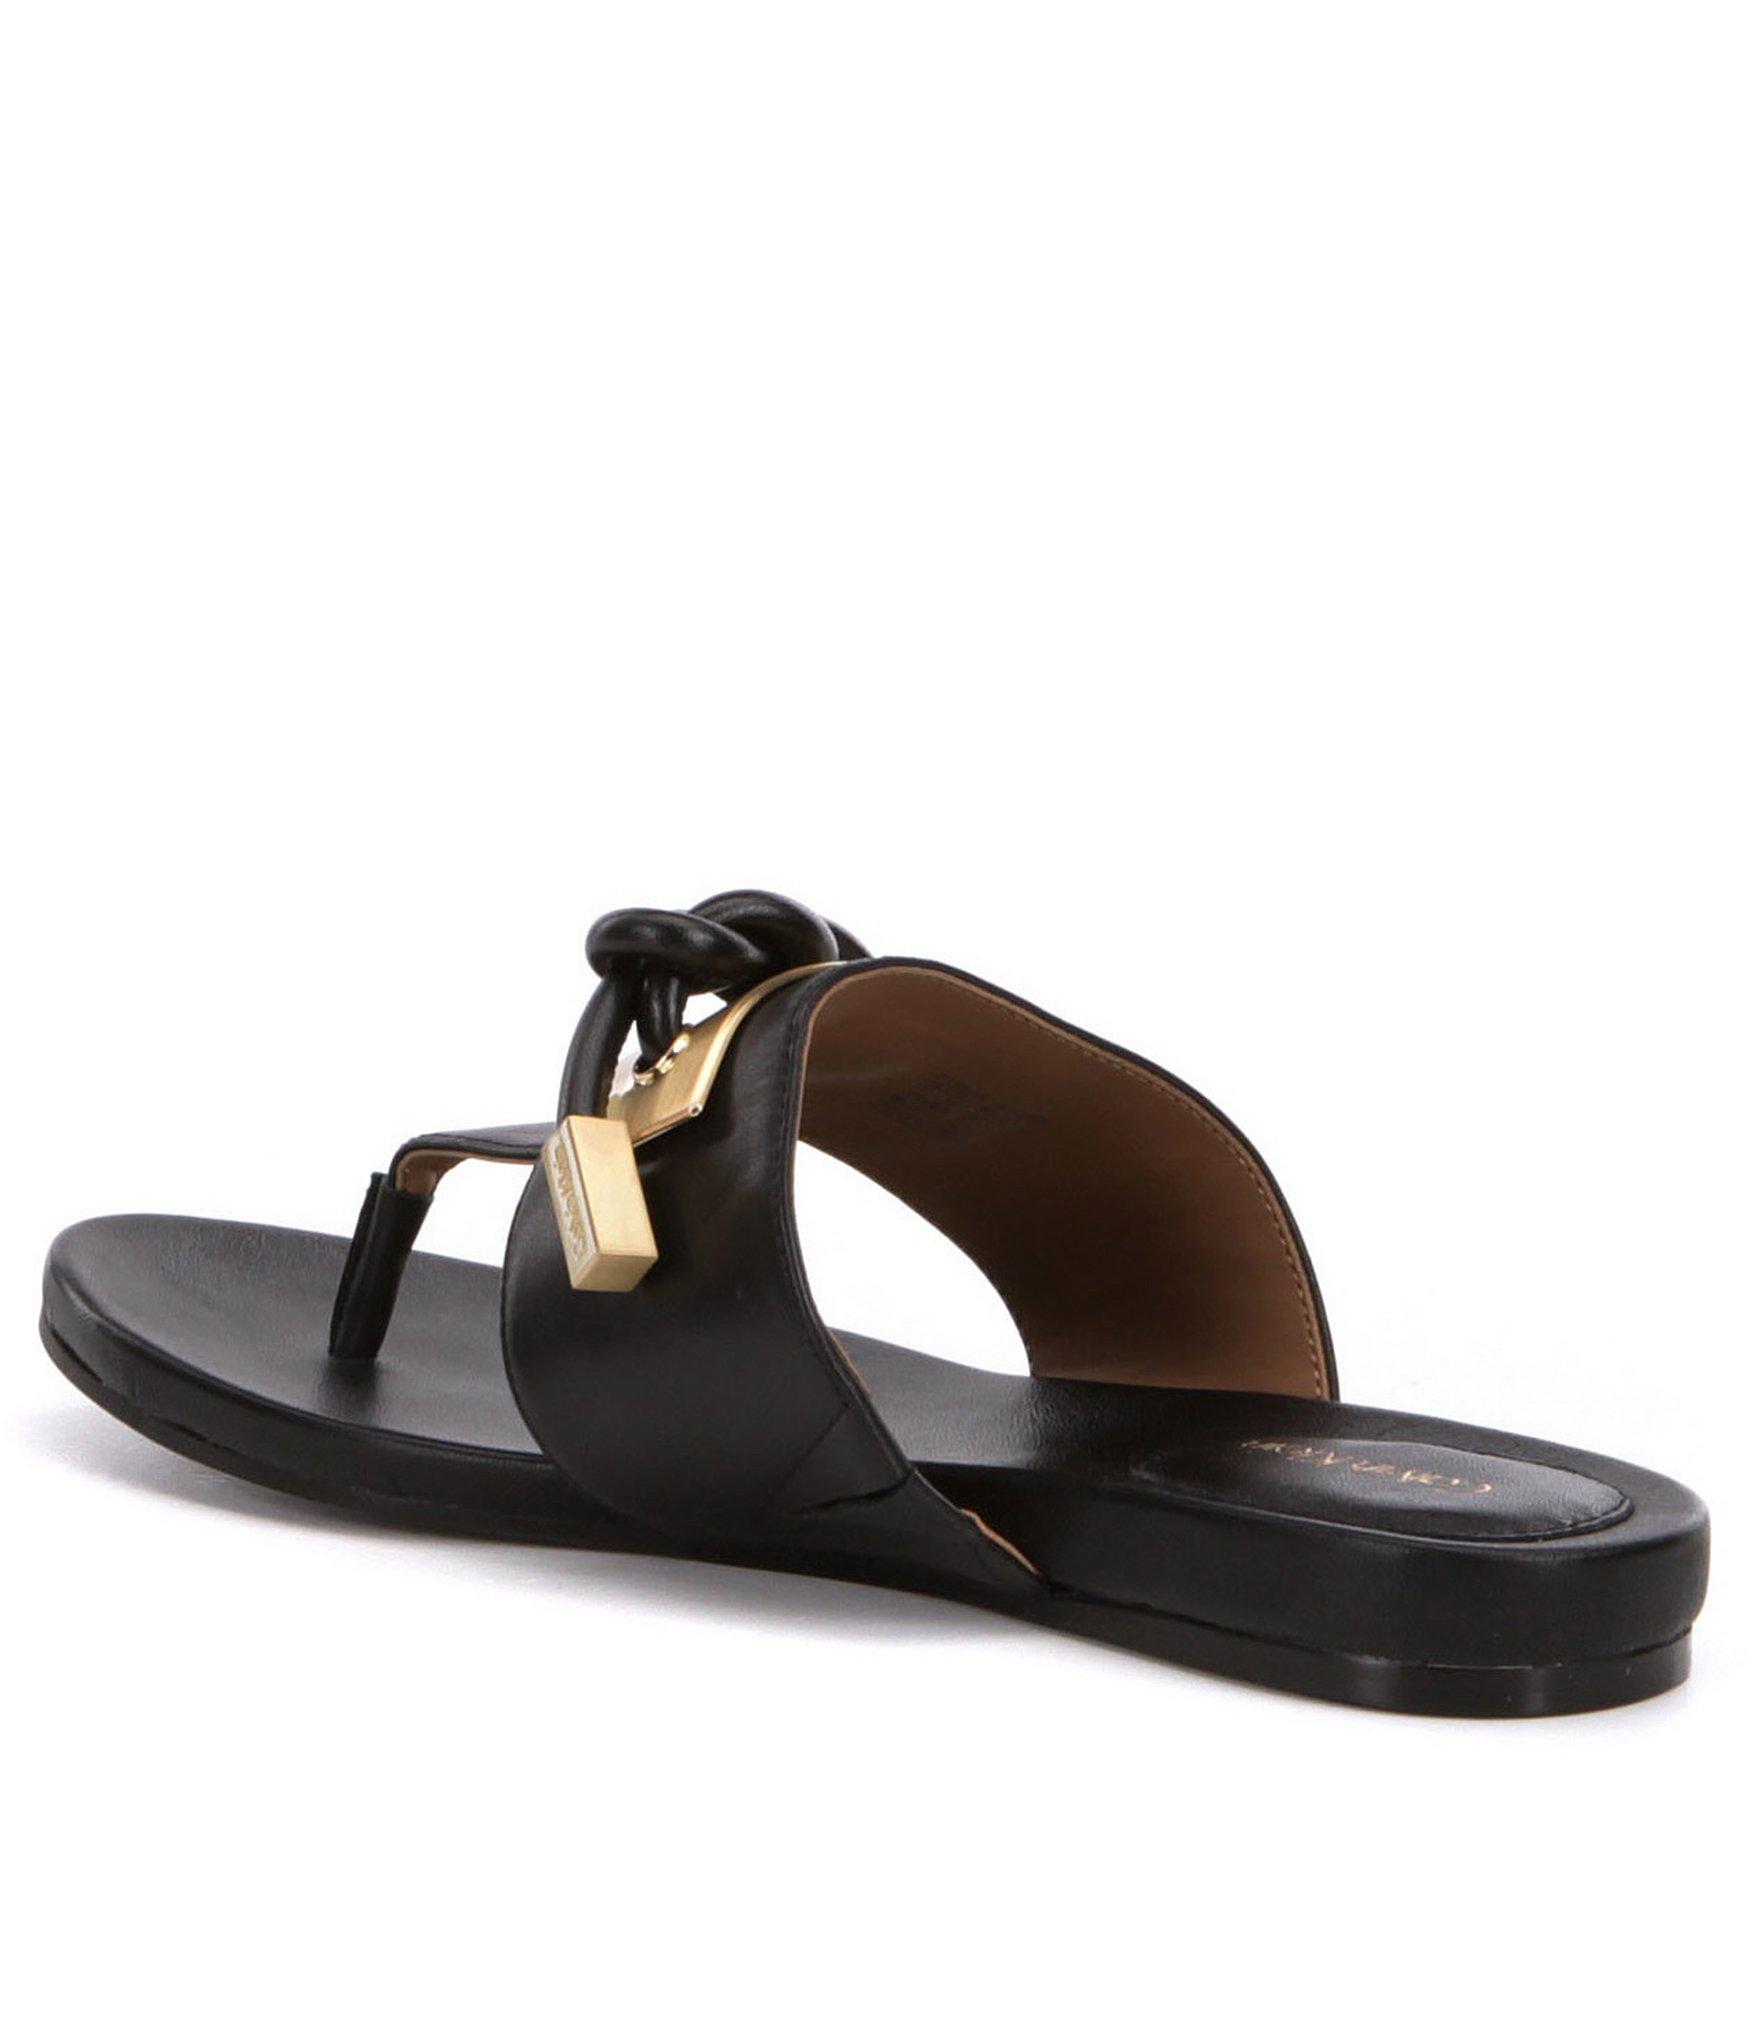 Calvin Klein Leather Parson Thong Sandals in Black - Lyst